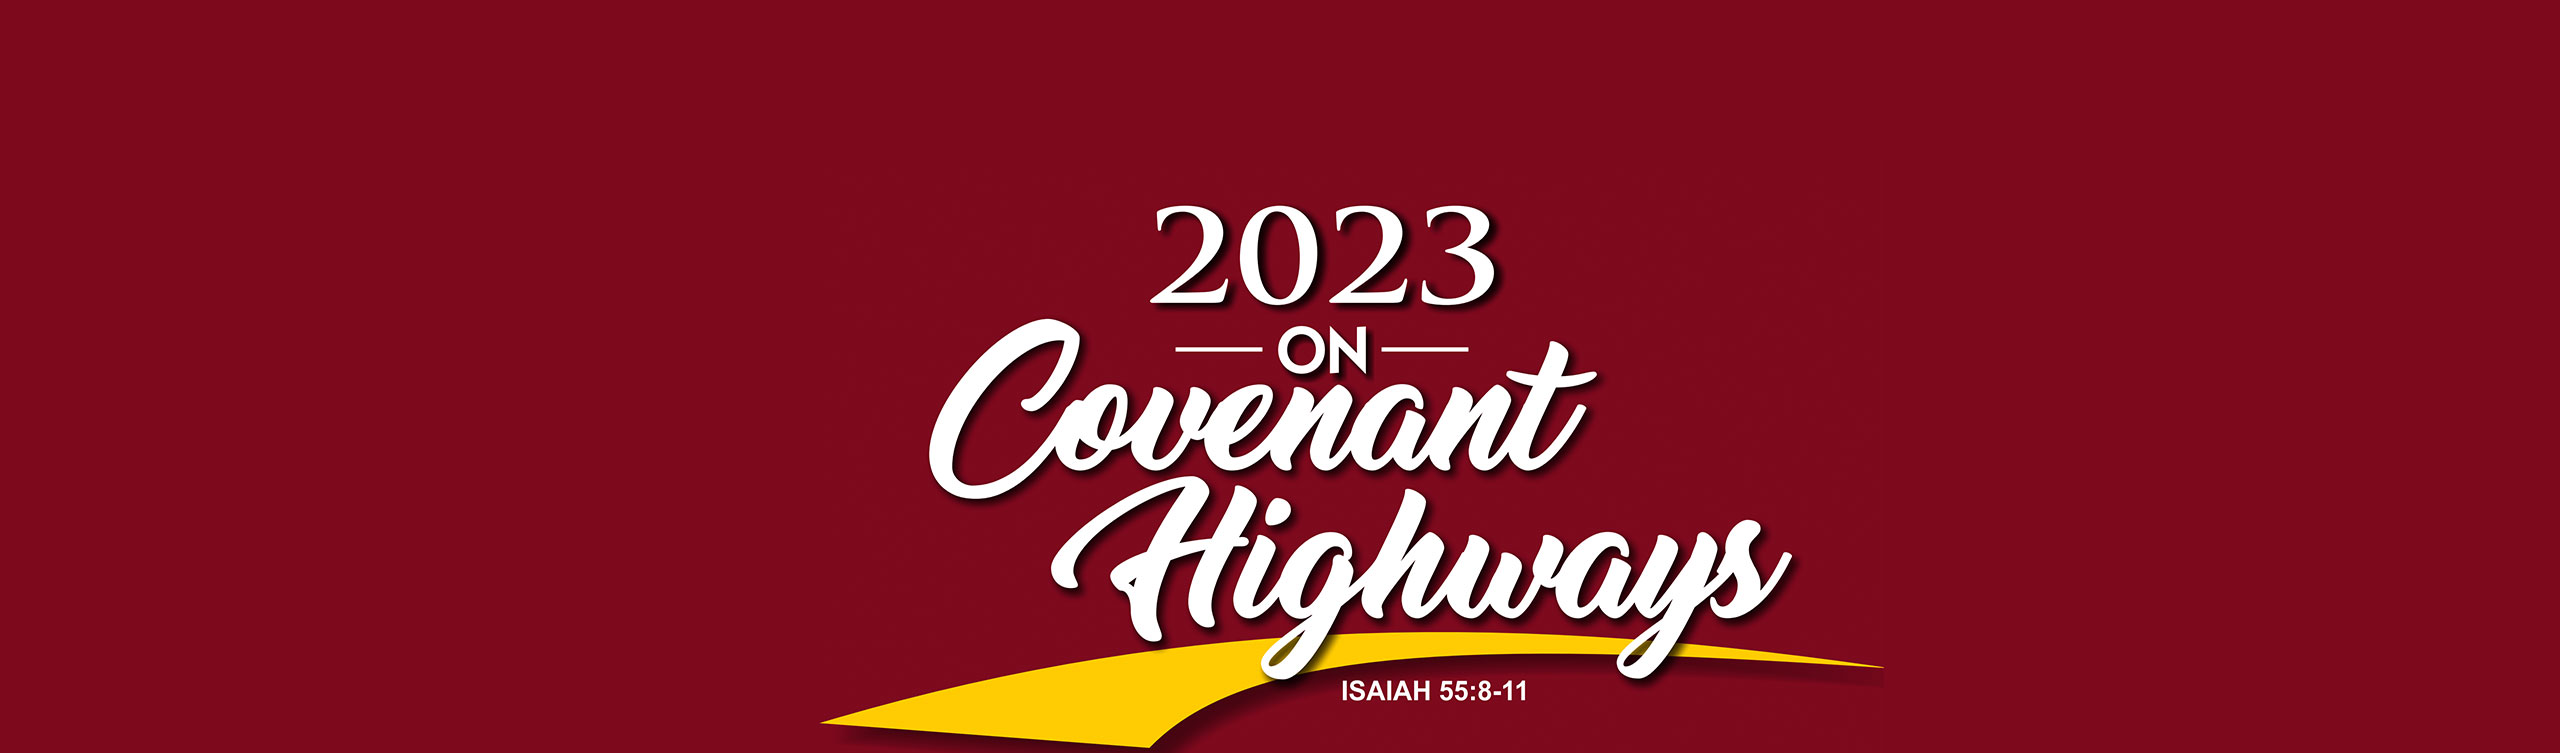 covenant-highways-2023